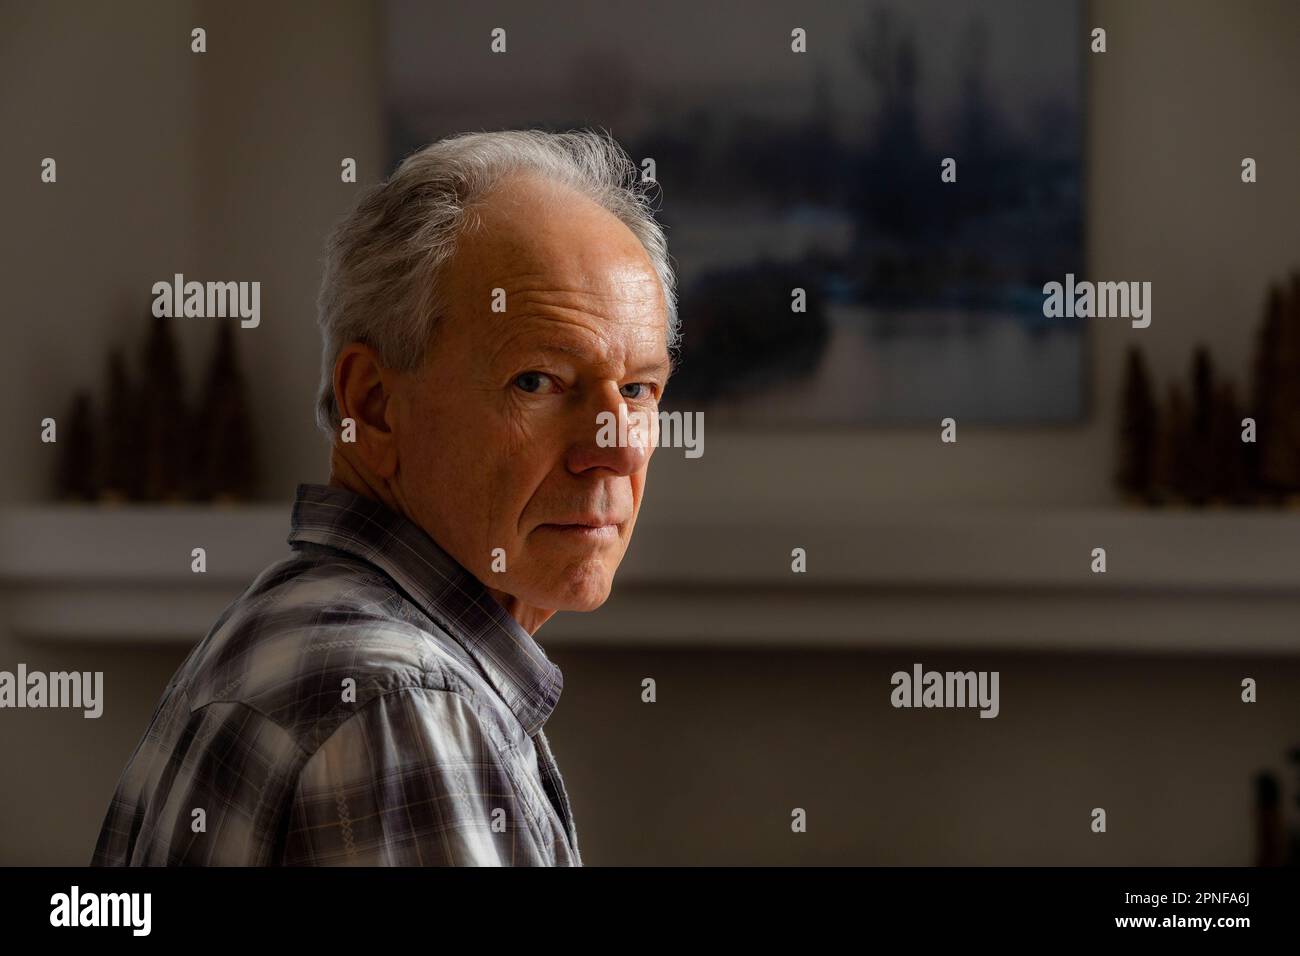 Portrait of senior man looking at camera Banque D'Images